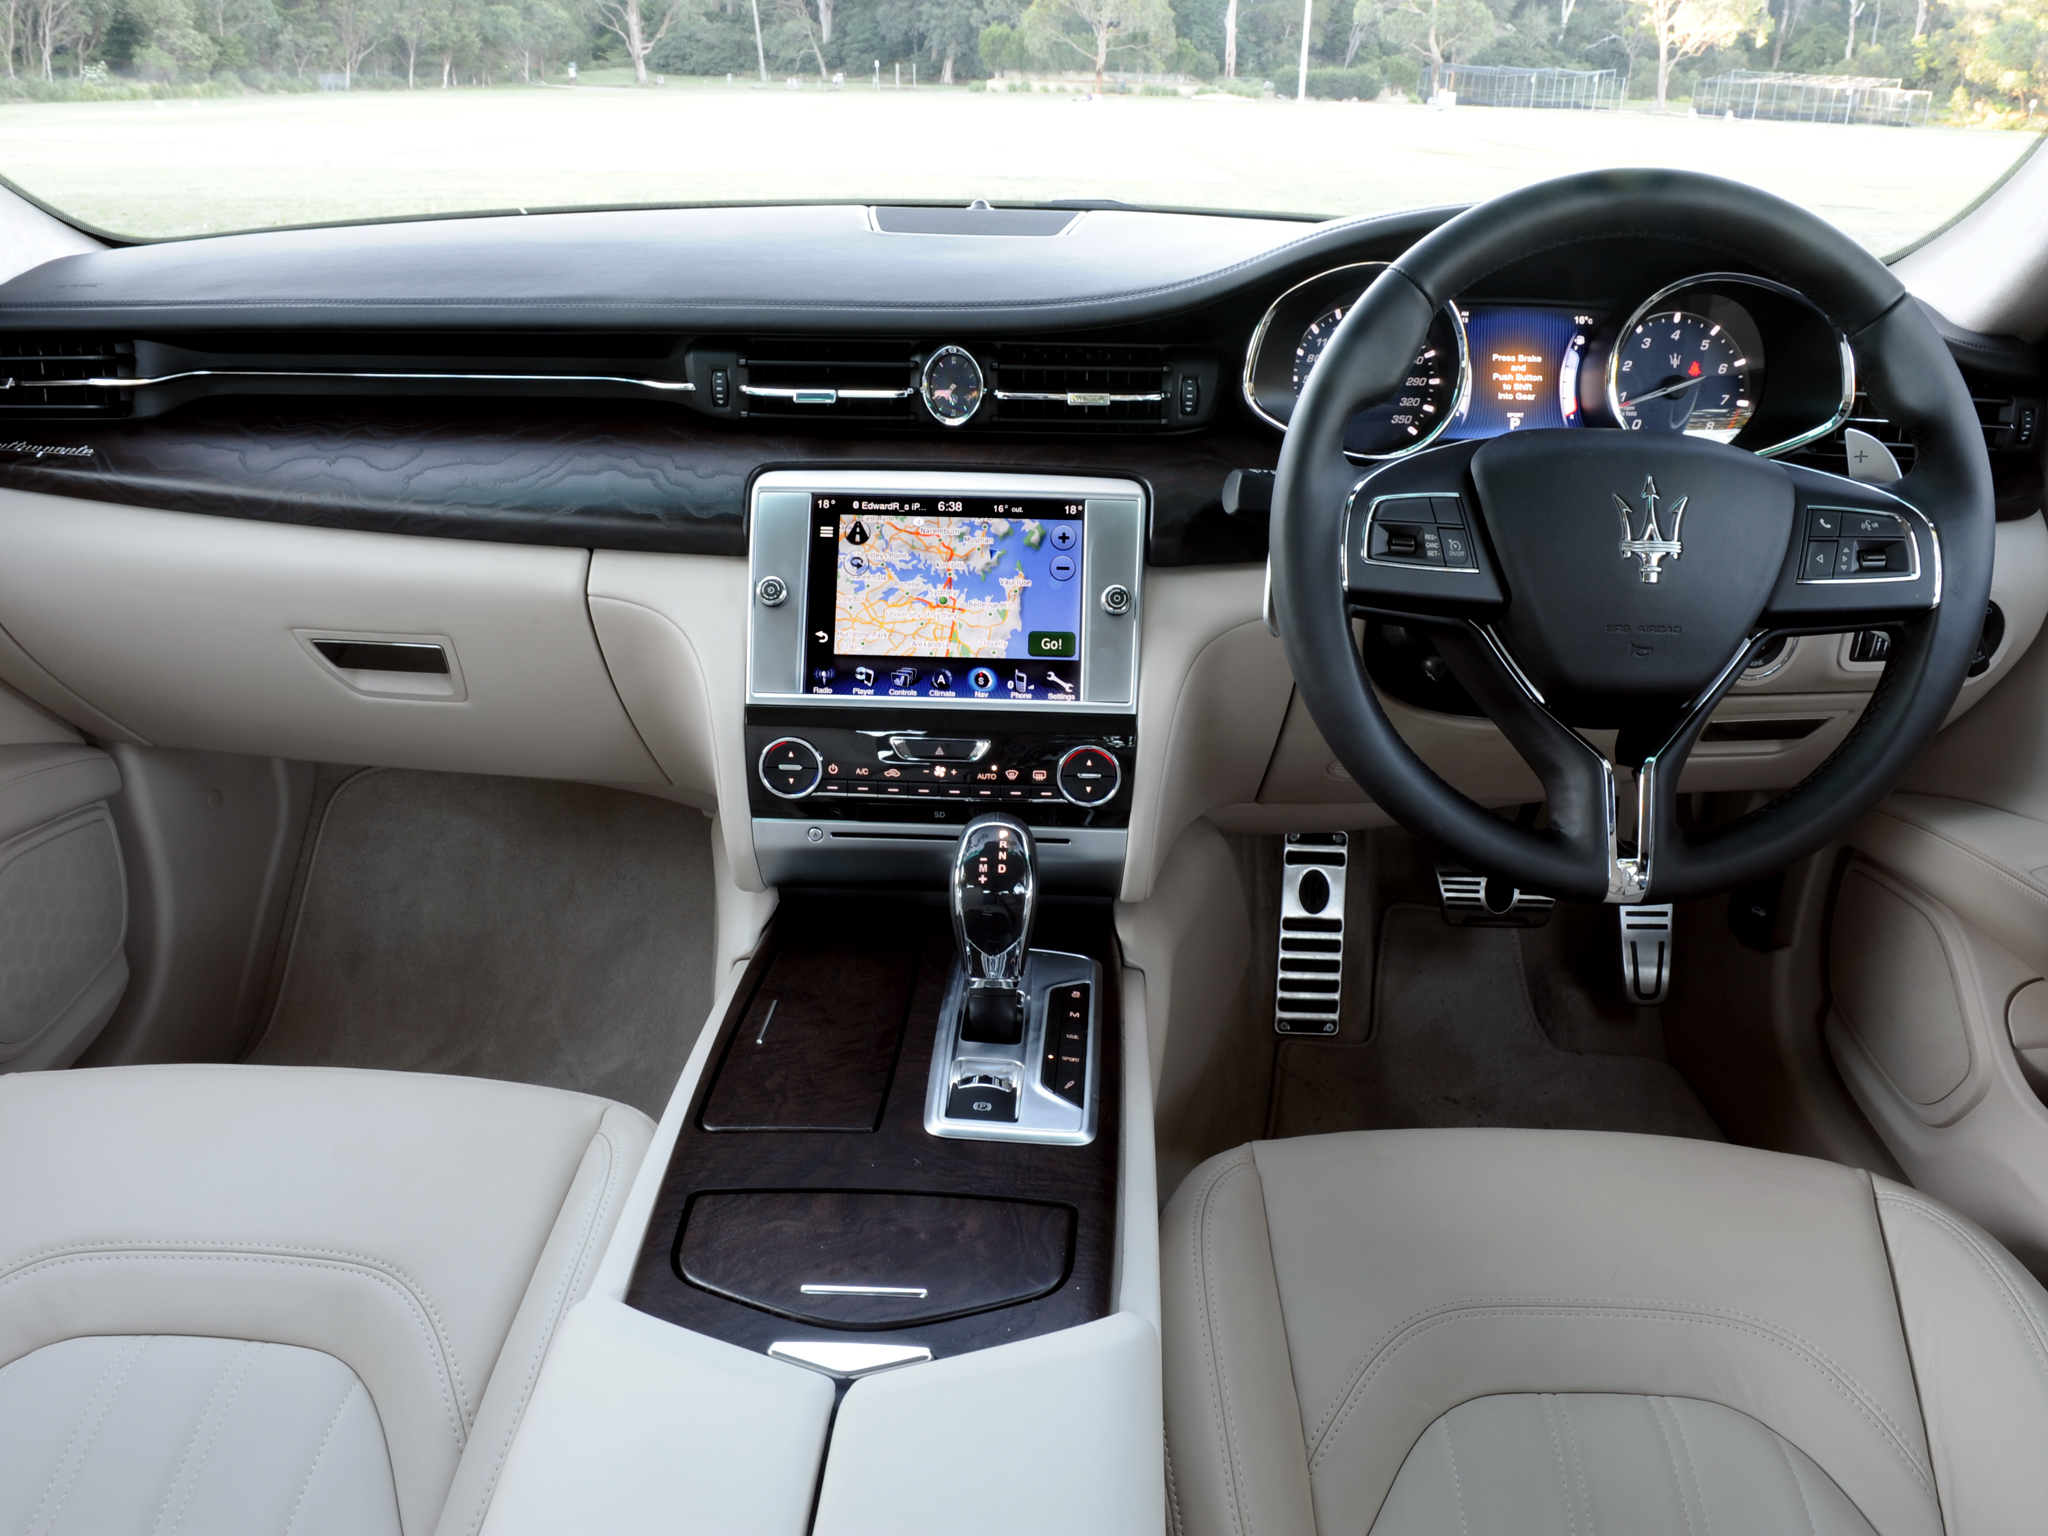 2013, Maserati, Quattroporte, Gts, Au spec, Interior Wallpaper